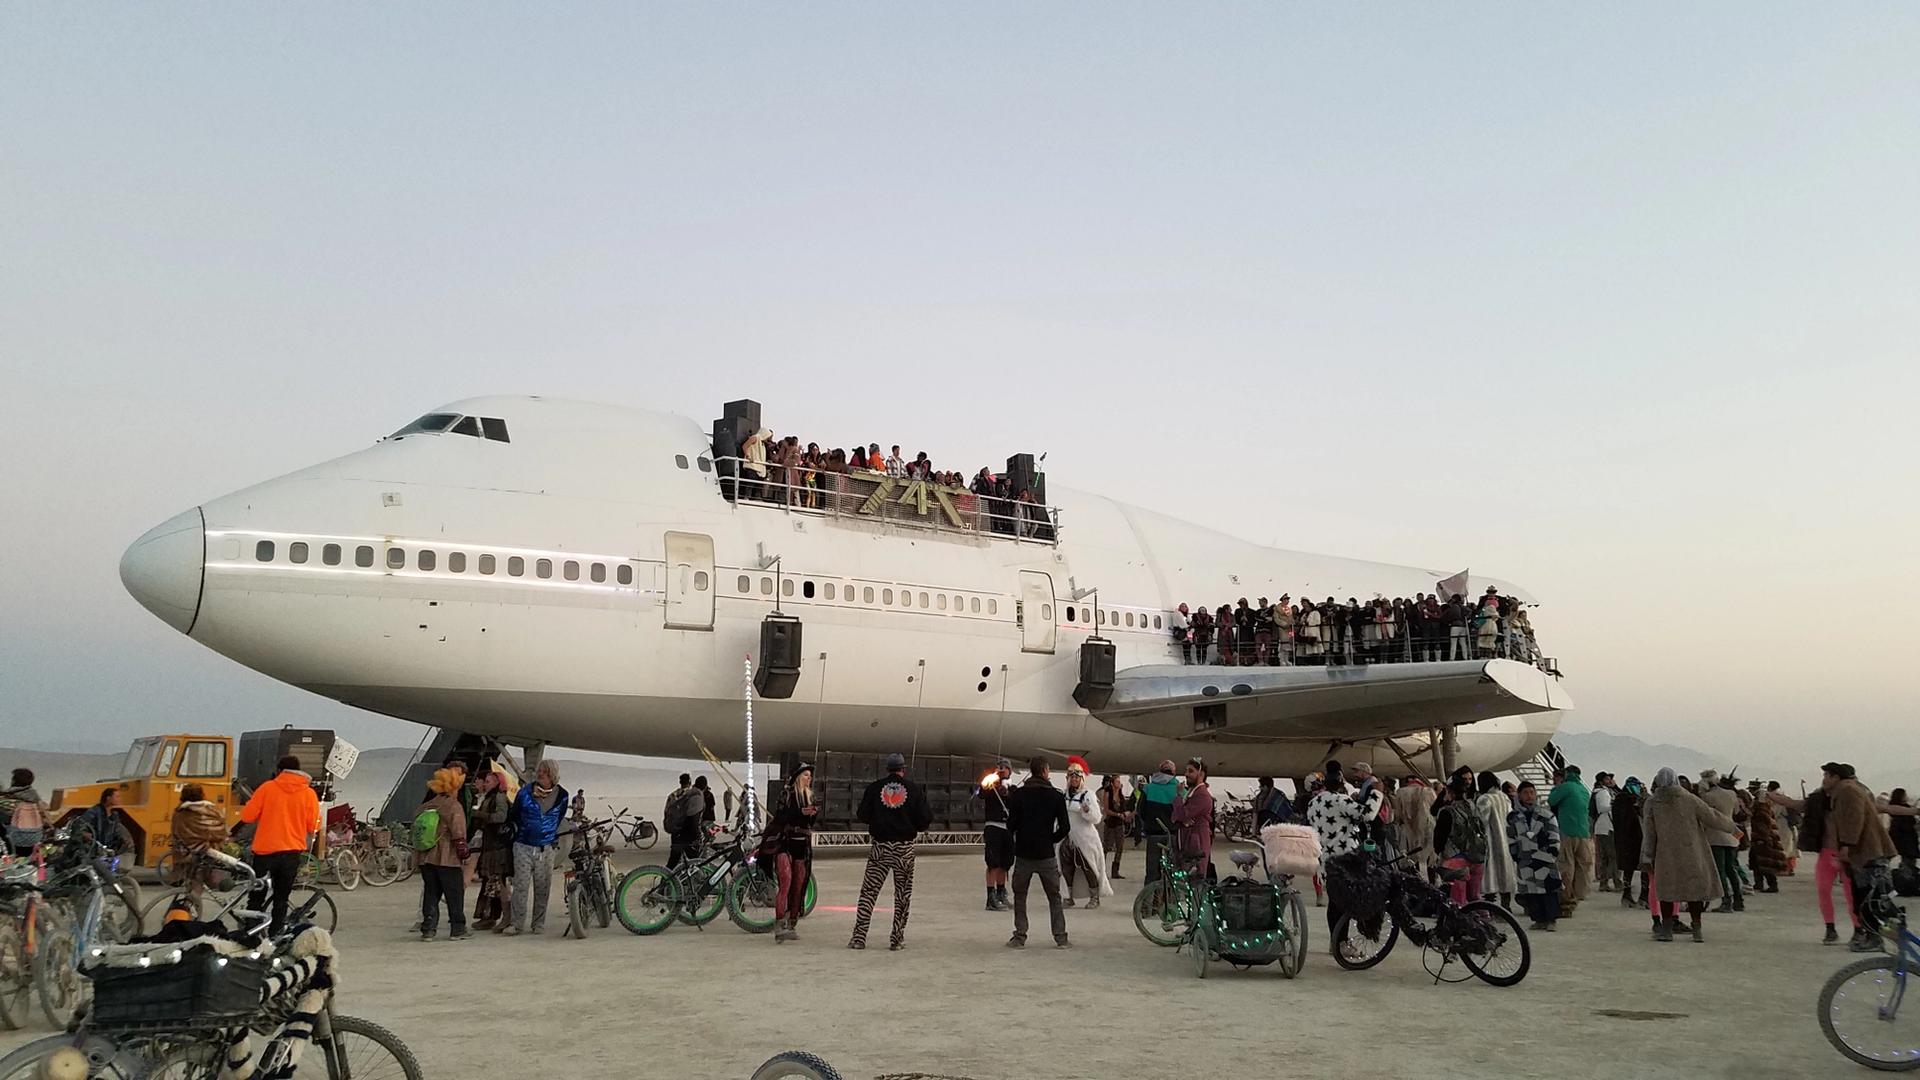 The Boeing 747 jet installed at Burning Man by Ken Feldman and Imagination Studio. Melanie McClenahan.